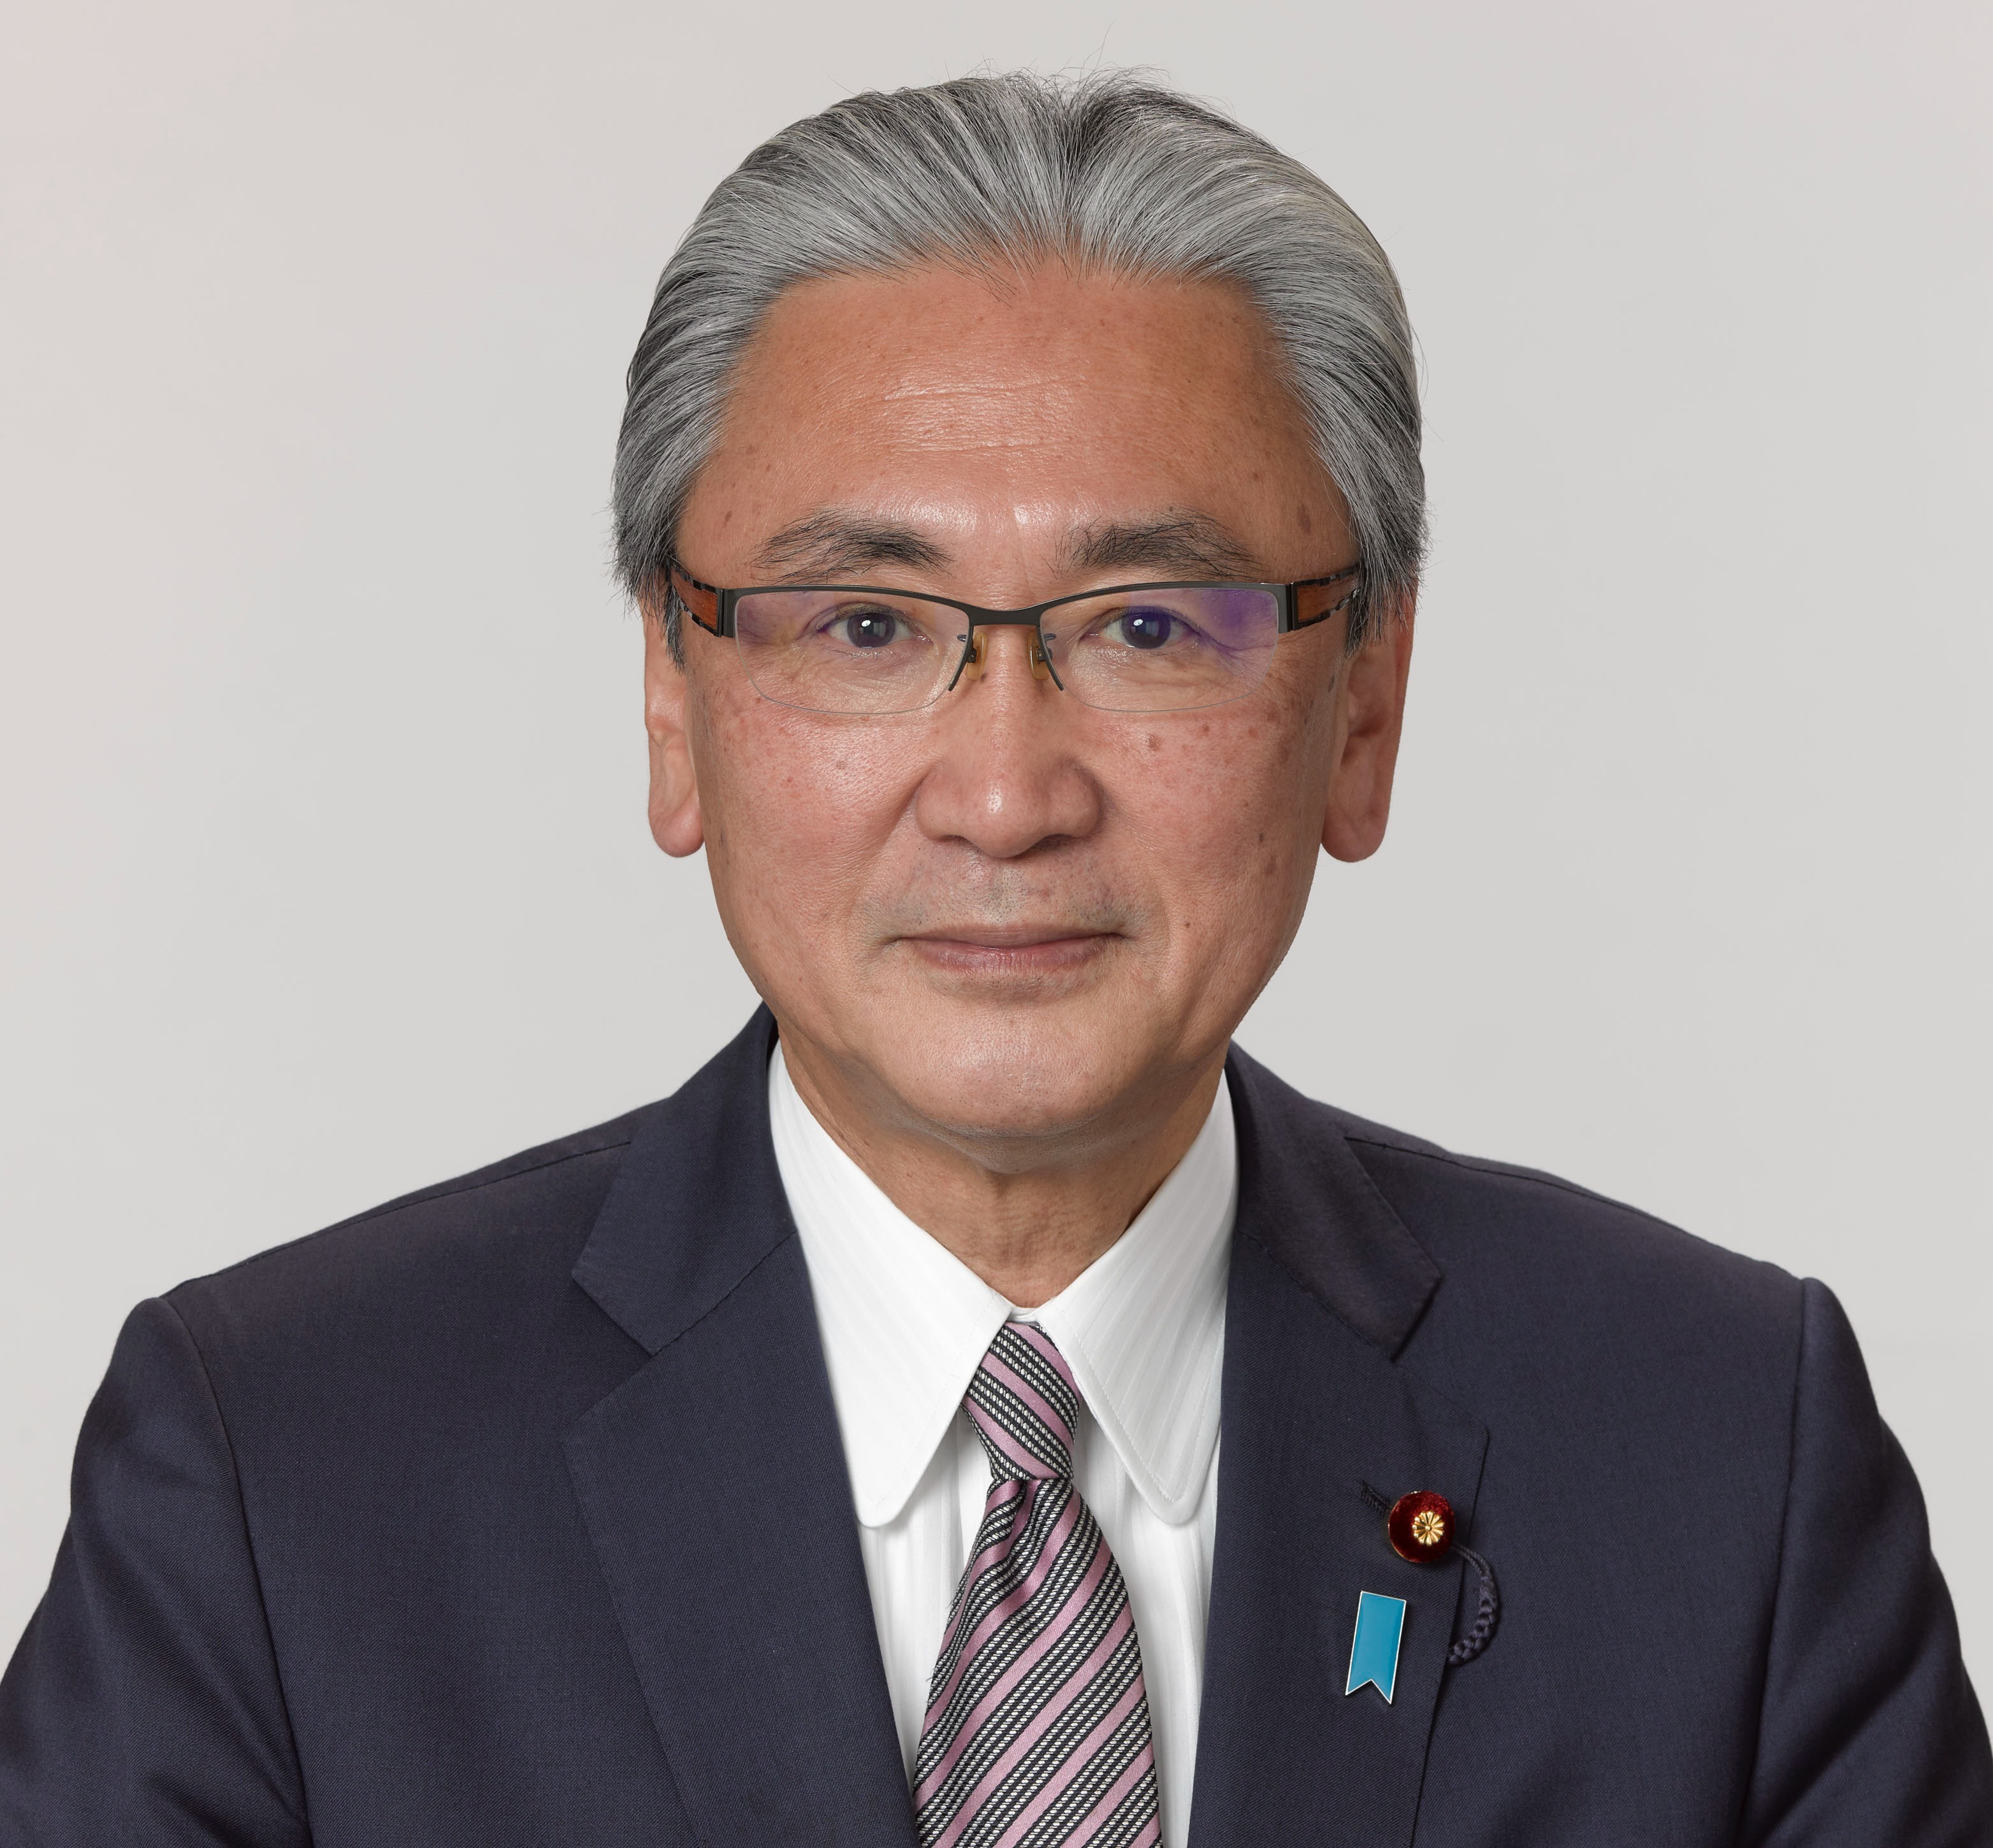 The Hon. Keiji FURUYA